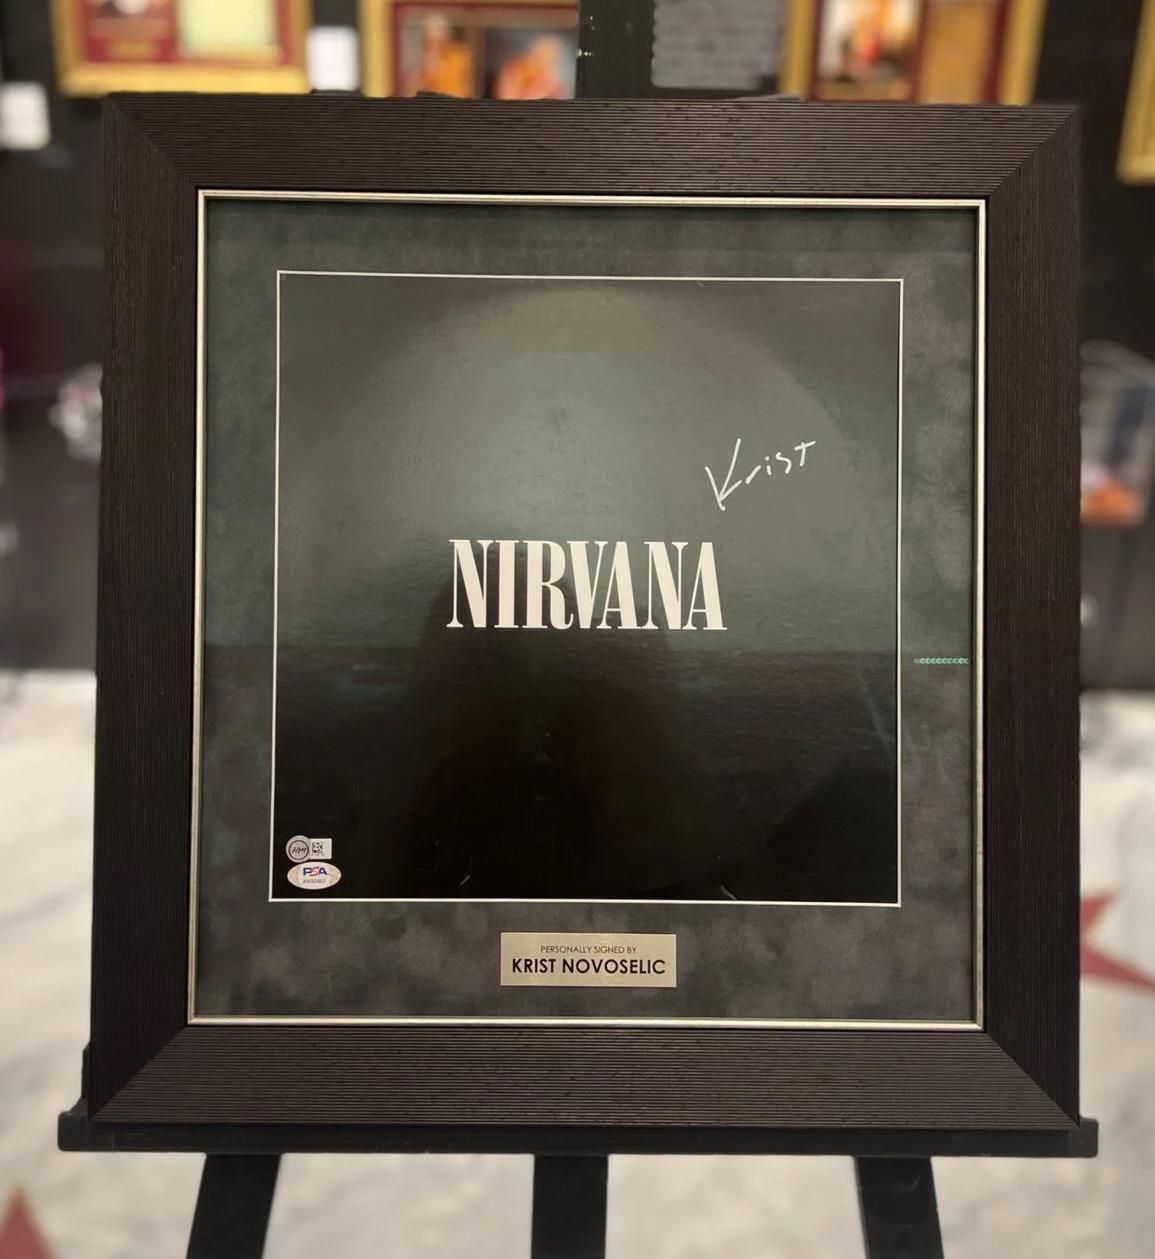 Пластинка &laquo;Nirvana&raquo; с автографом гитариста группы Криста Новоселича